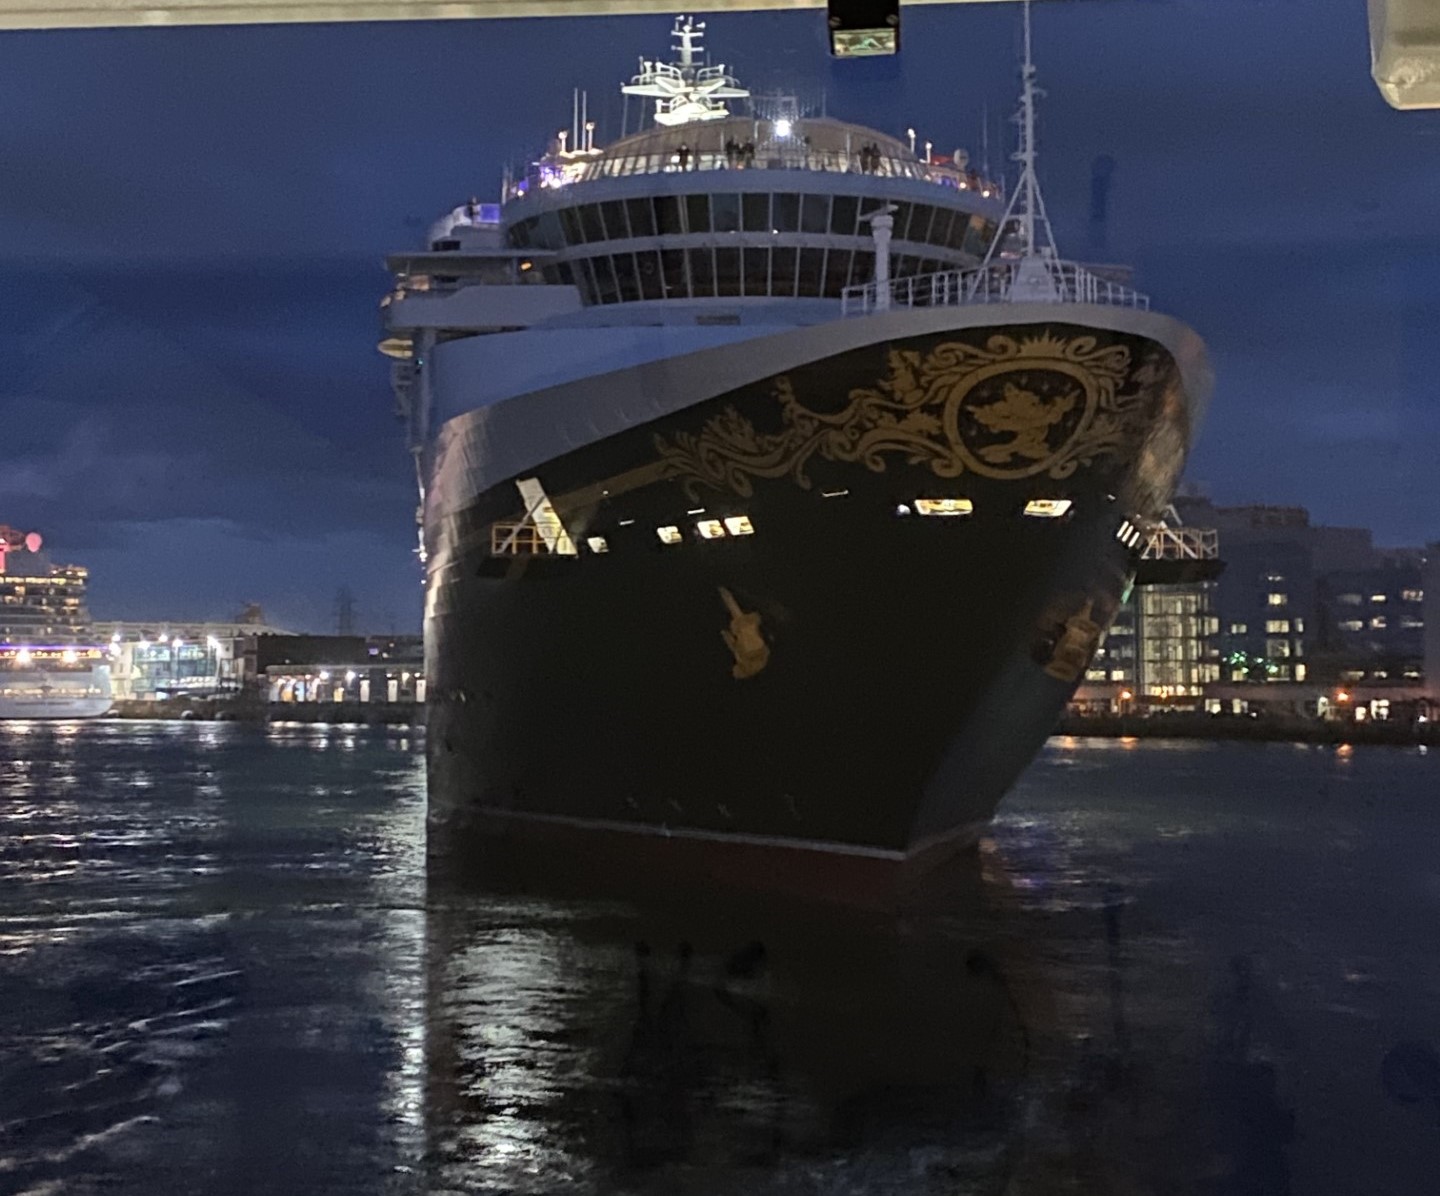 Night Photo of a Ship